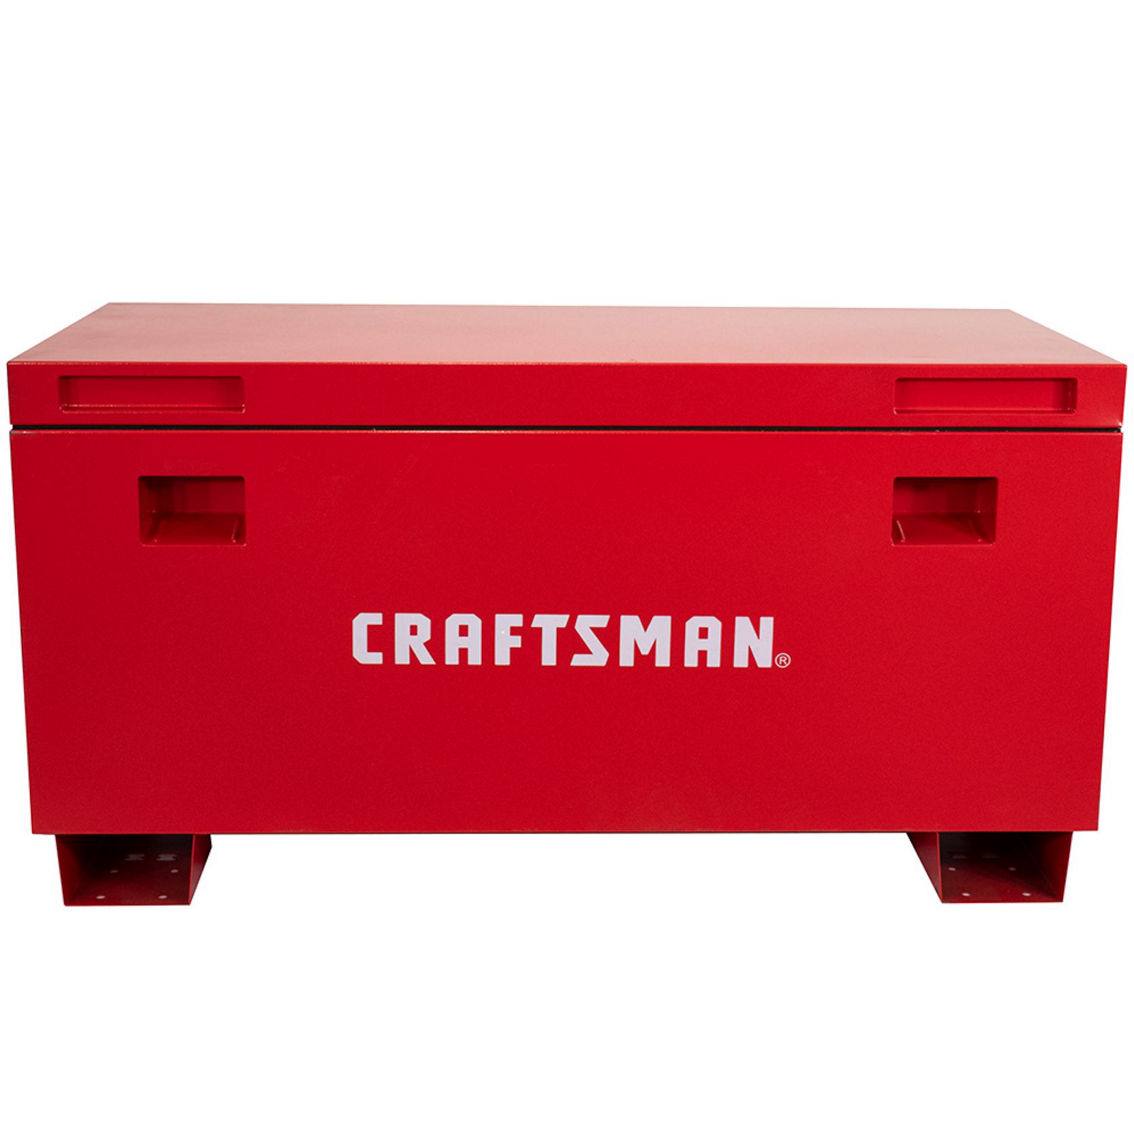 Craftsman 48 in. Jobsite Box - Image 2 of 9